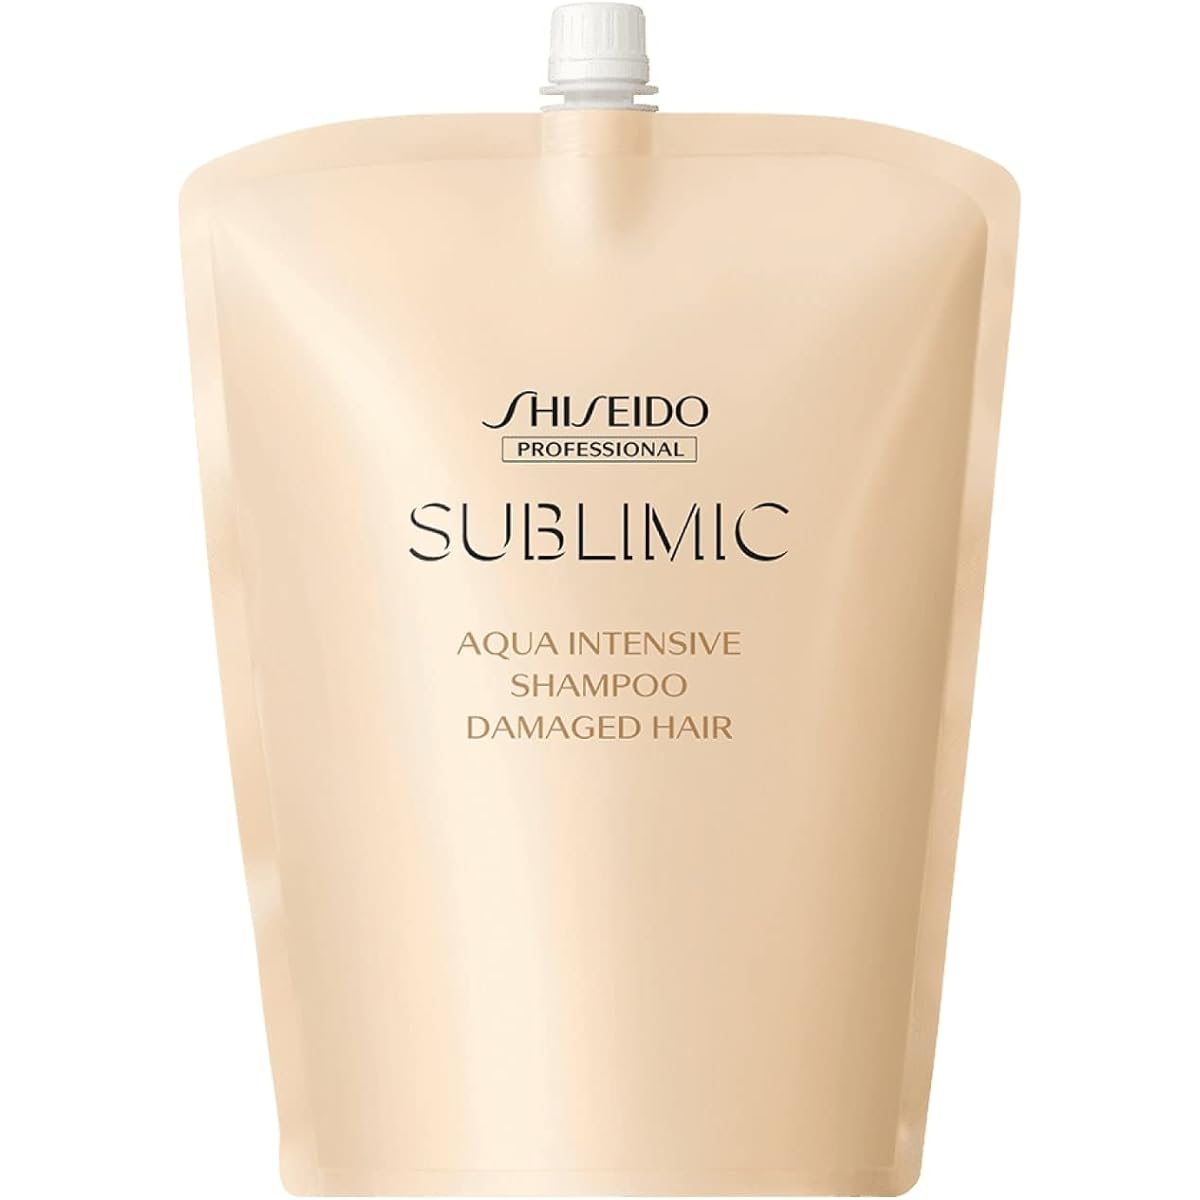 Shiseido Pro Sublimic Aqua Intensive Shampoo 1800ml Refill